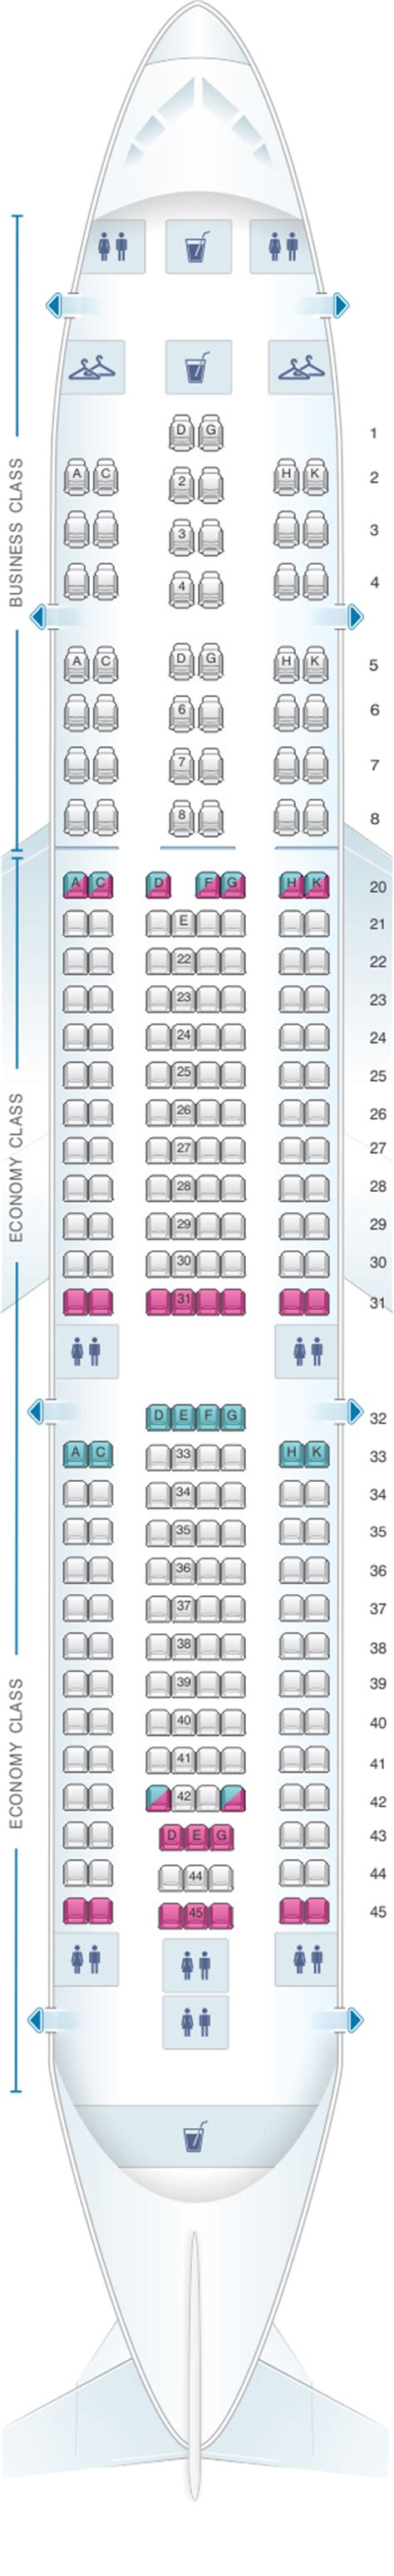 Seat Map Mea Airbus A330 200 Seatmaestro